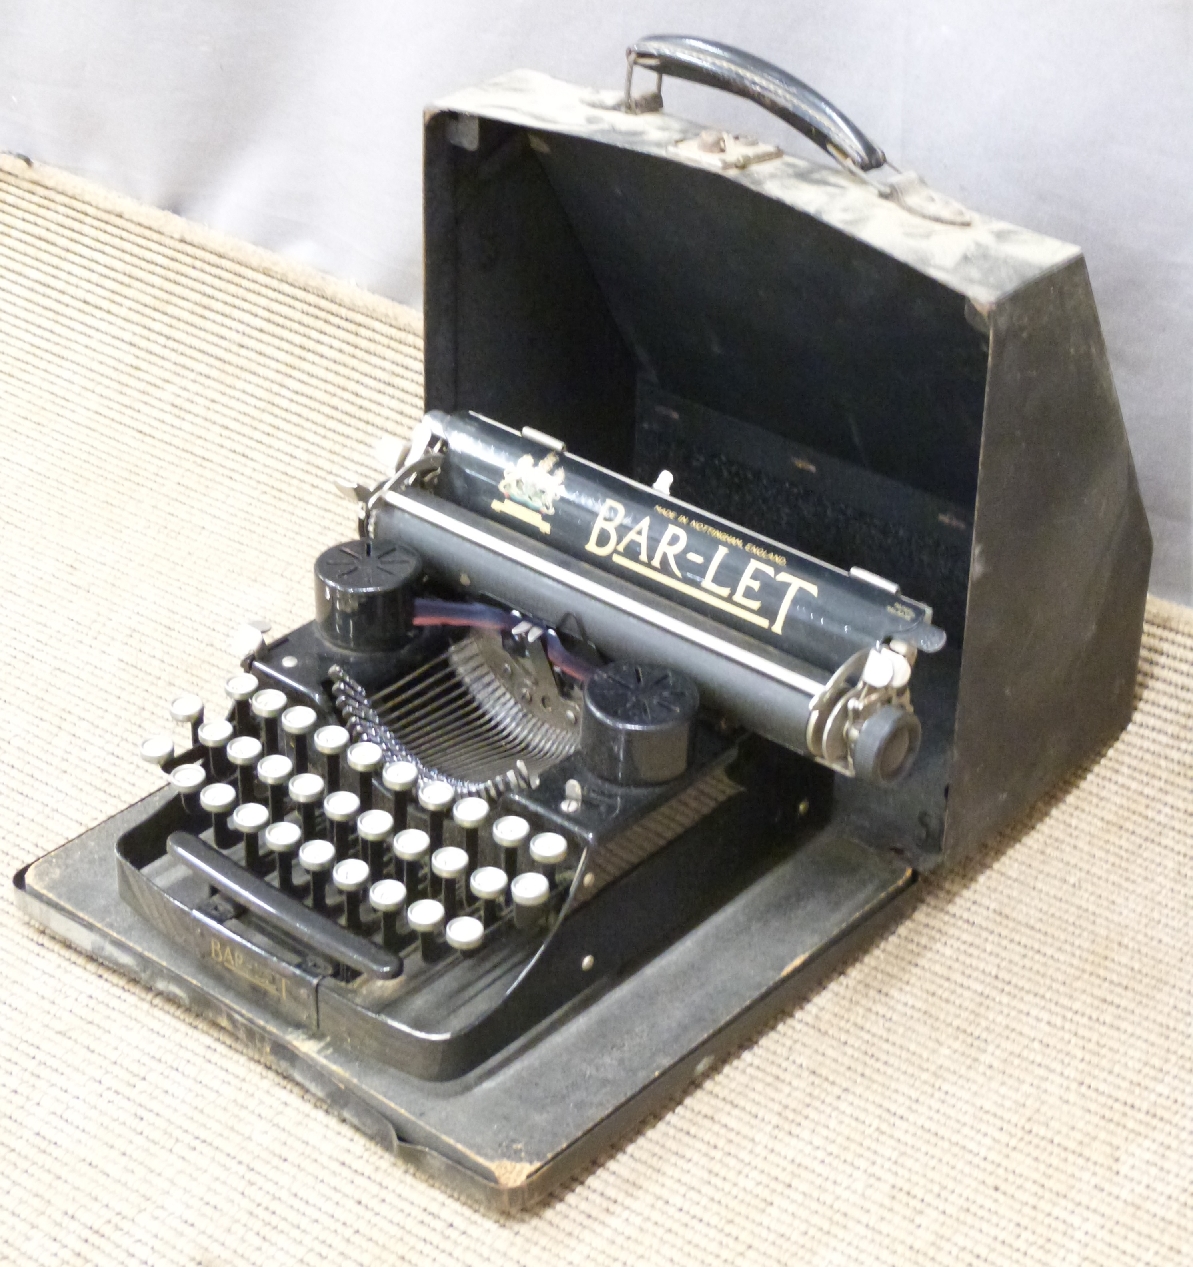 Bar-Let vintage typewriter in case - Image 2 of 2